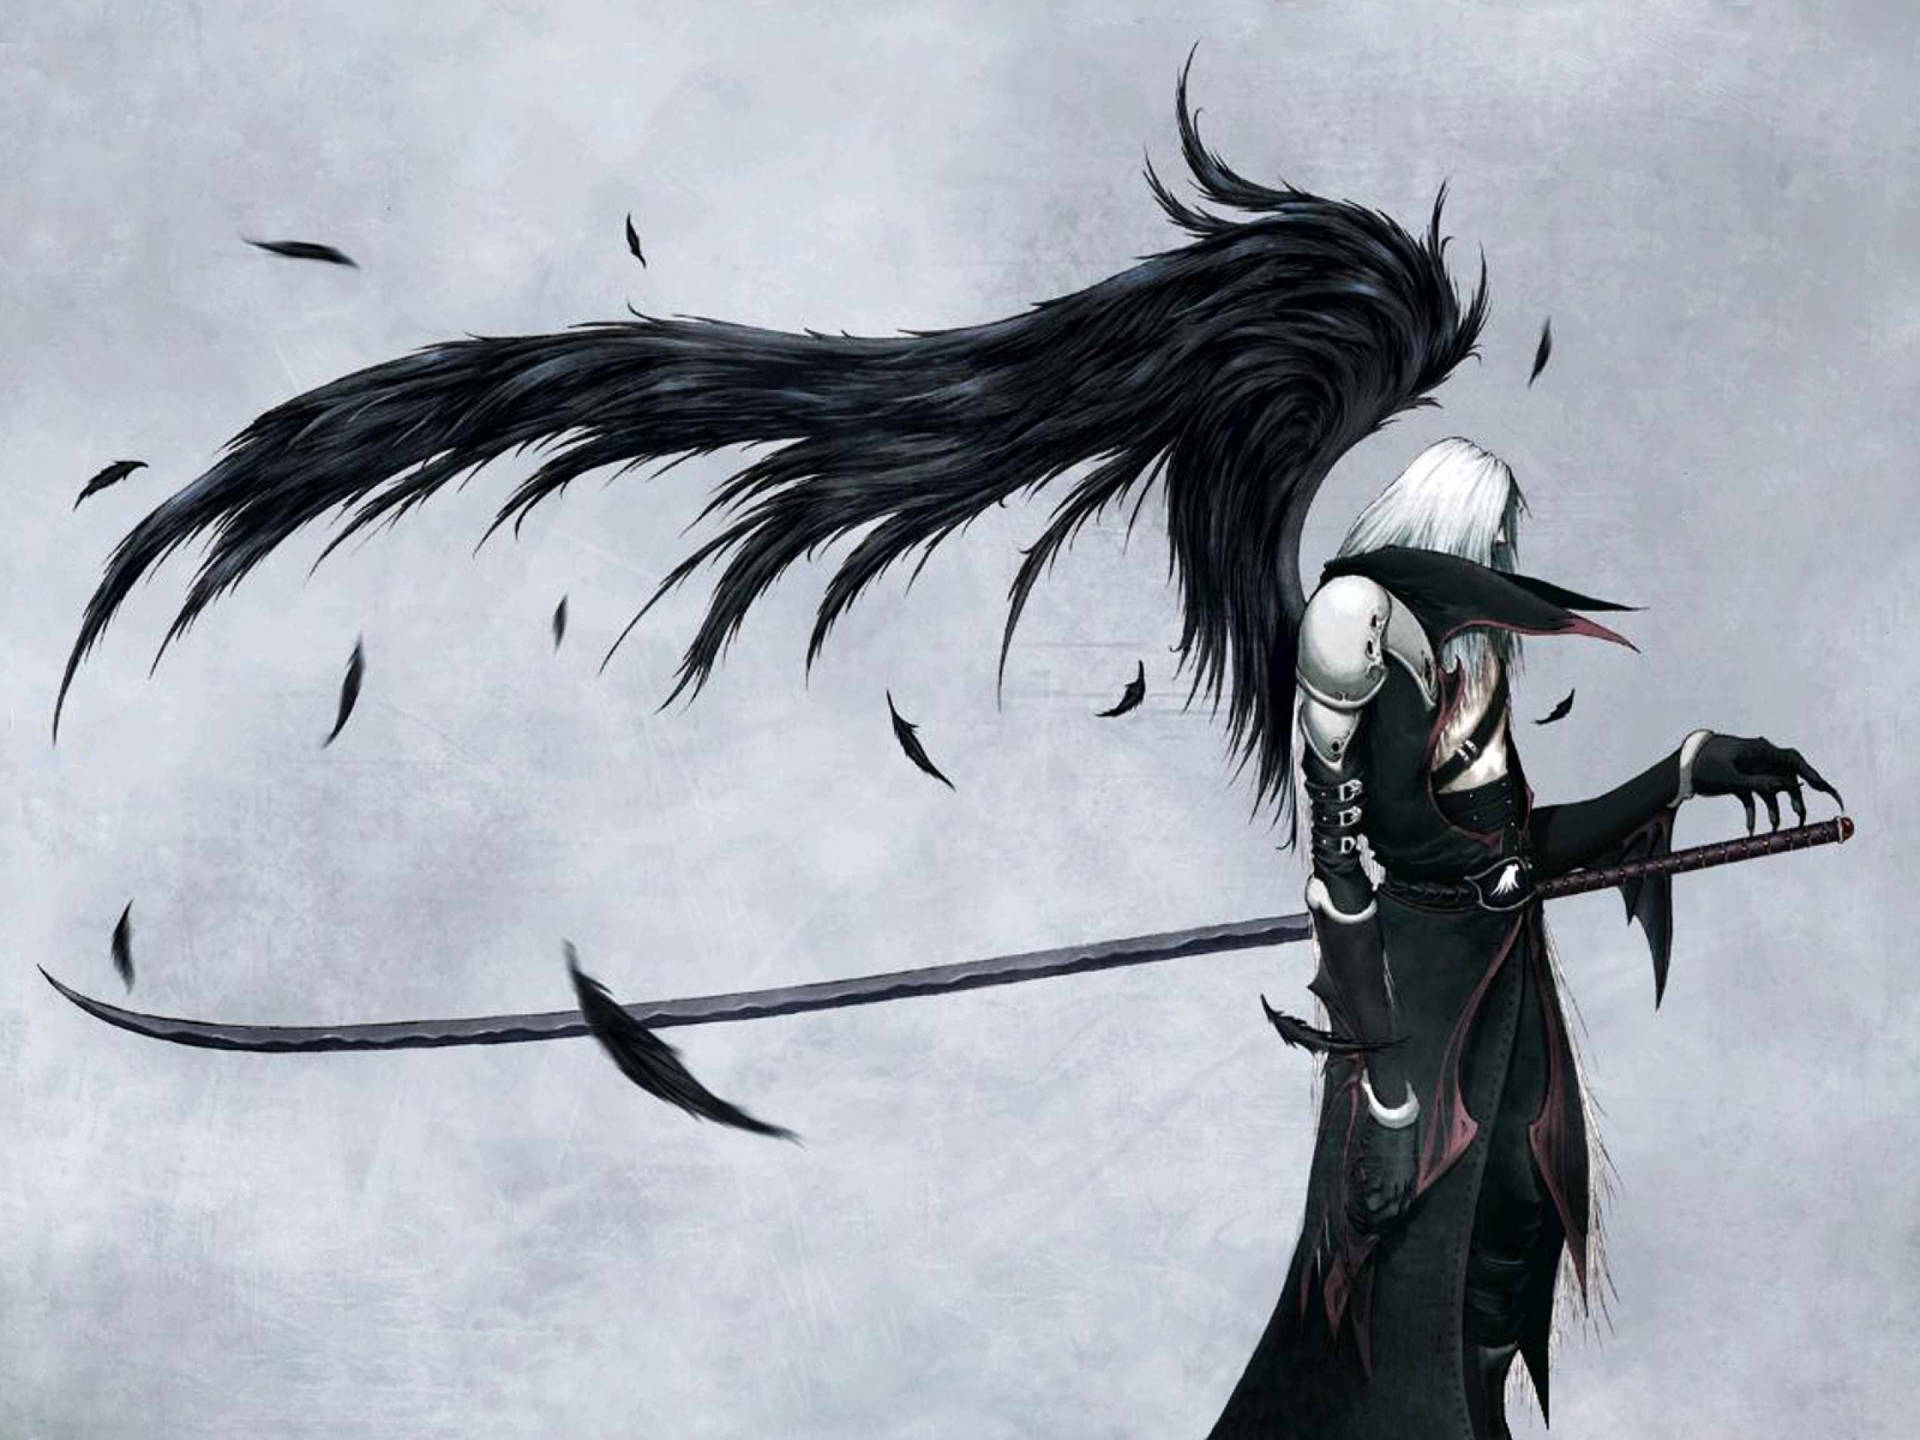 Sephiroth All Black Sword And Wings Wallpaper